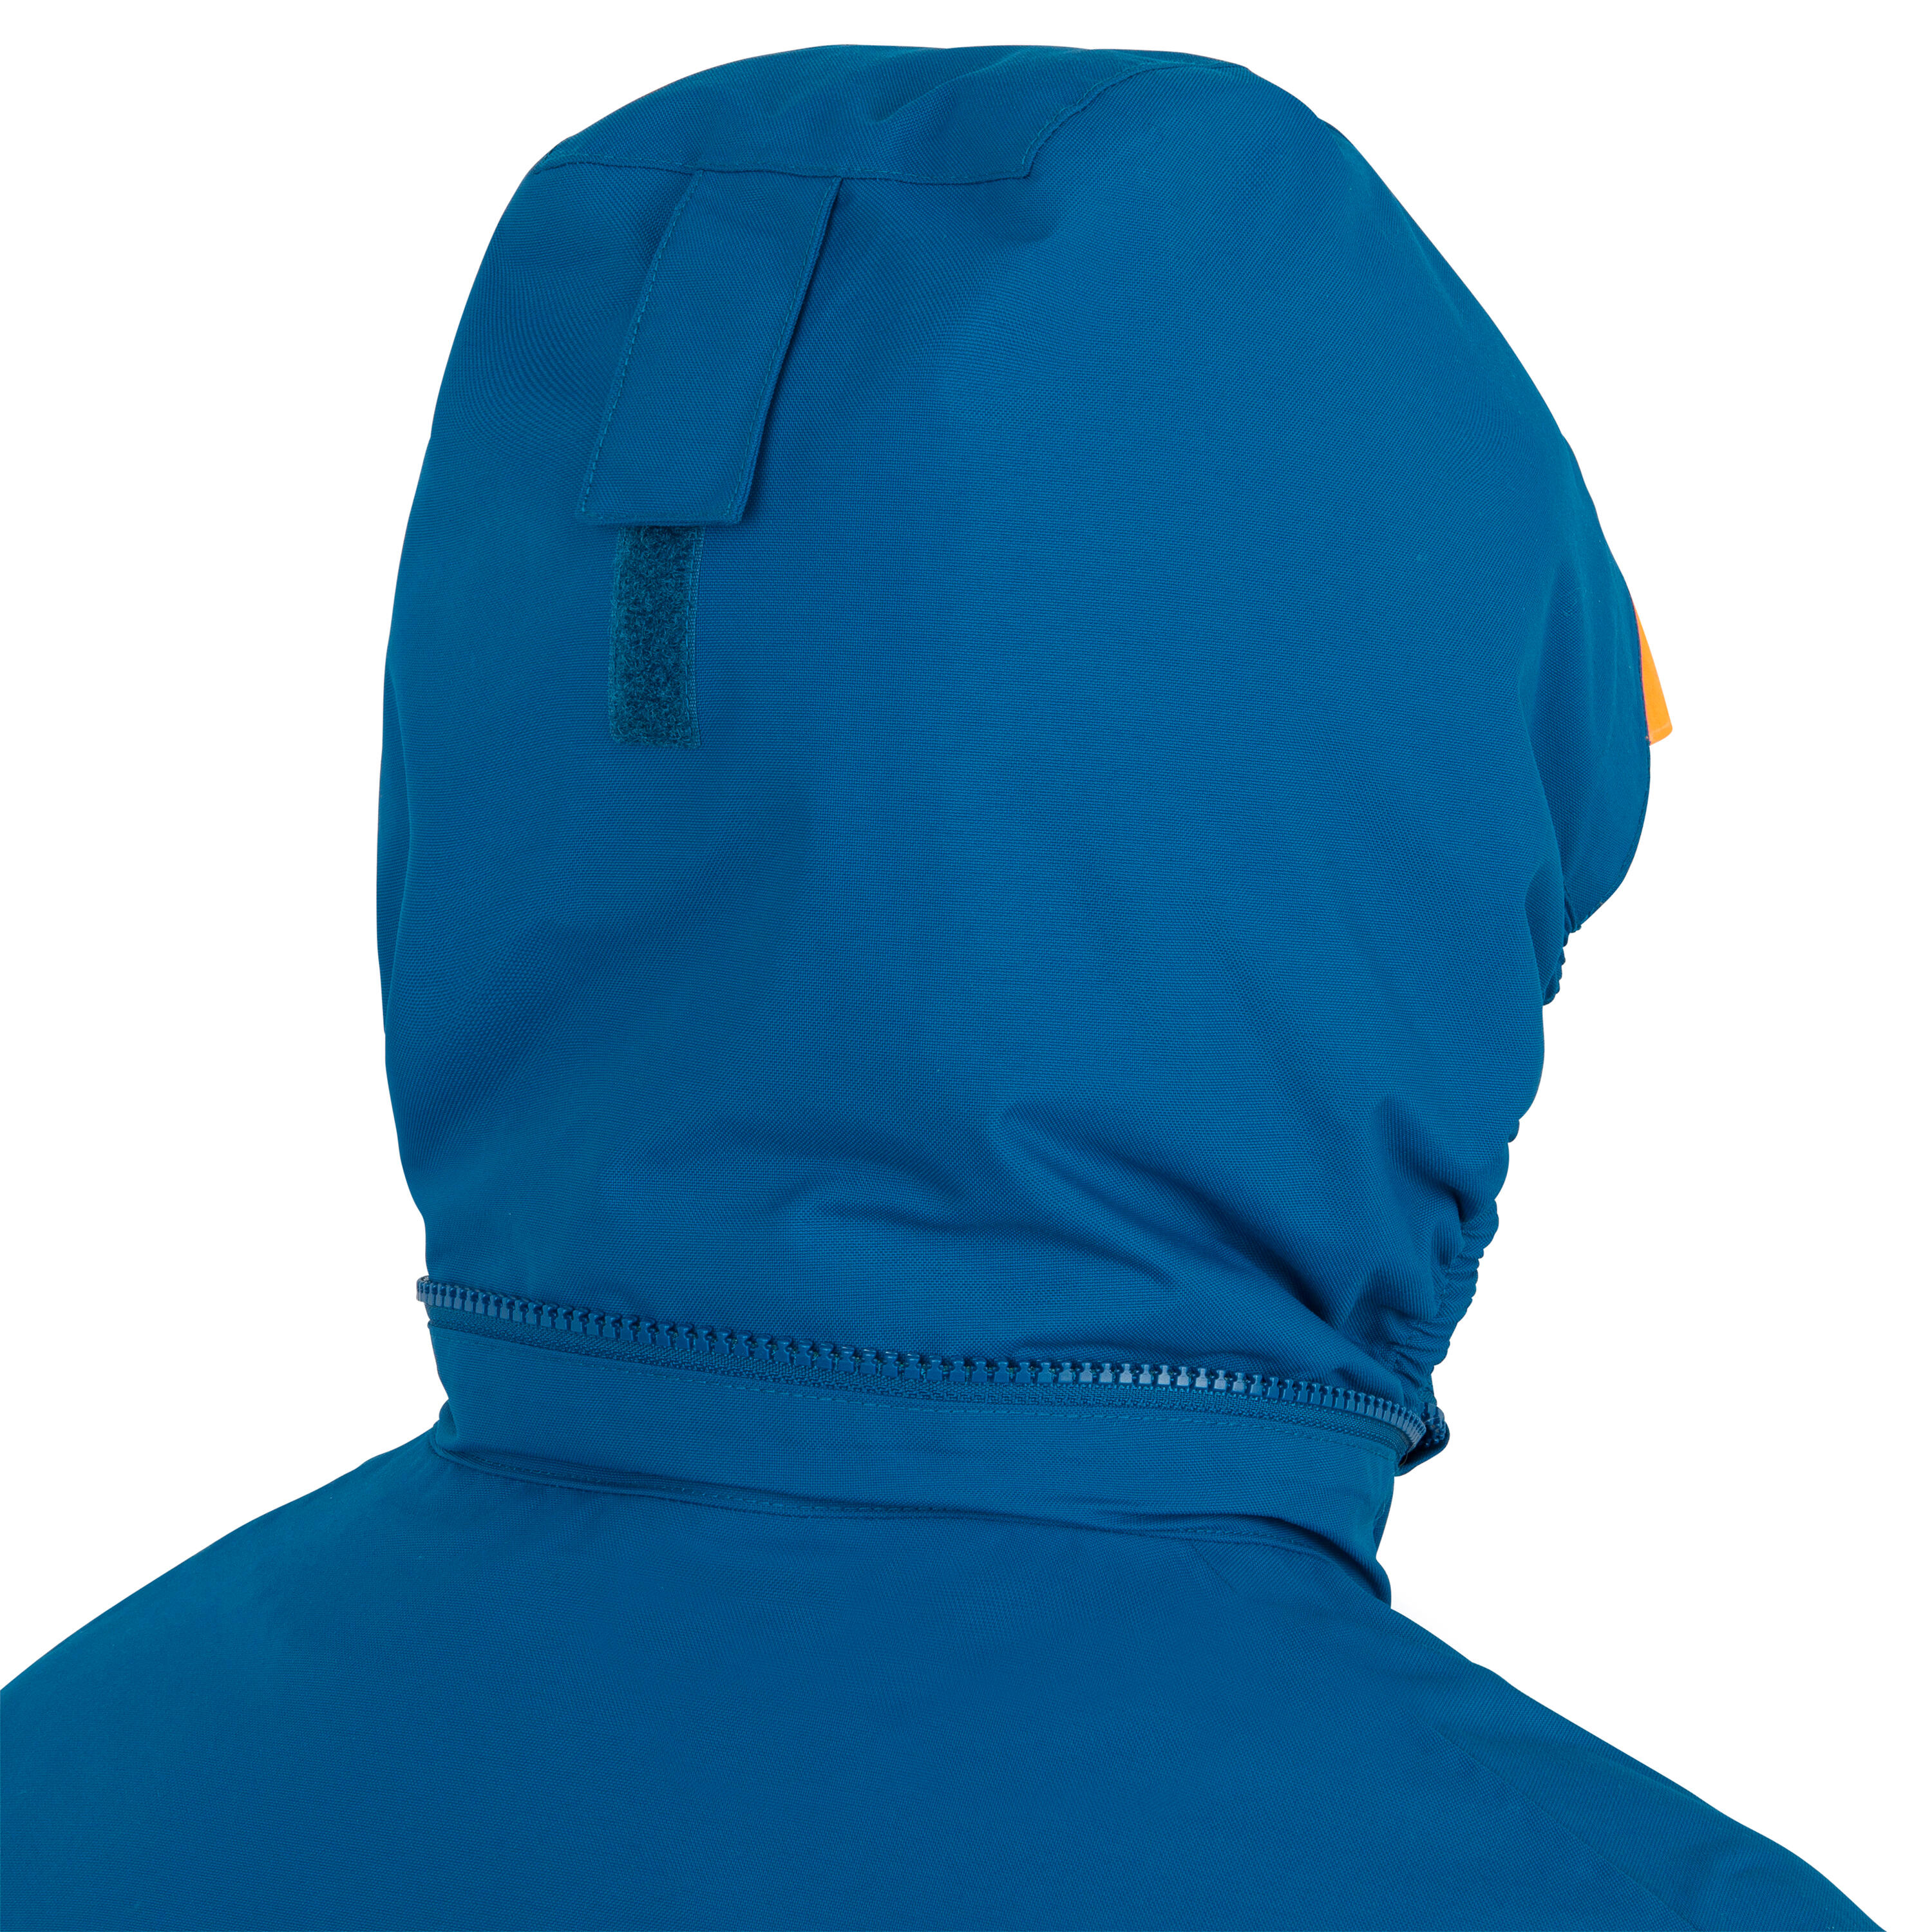 Kids' waterproof windproof sailing jacket 300 - Petrol blue 8/14